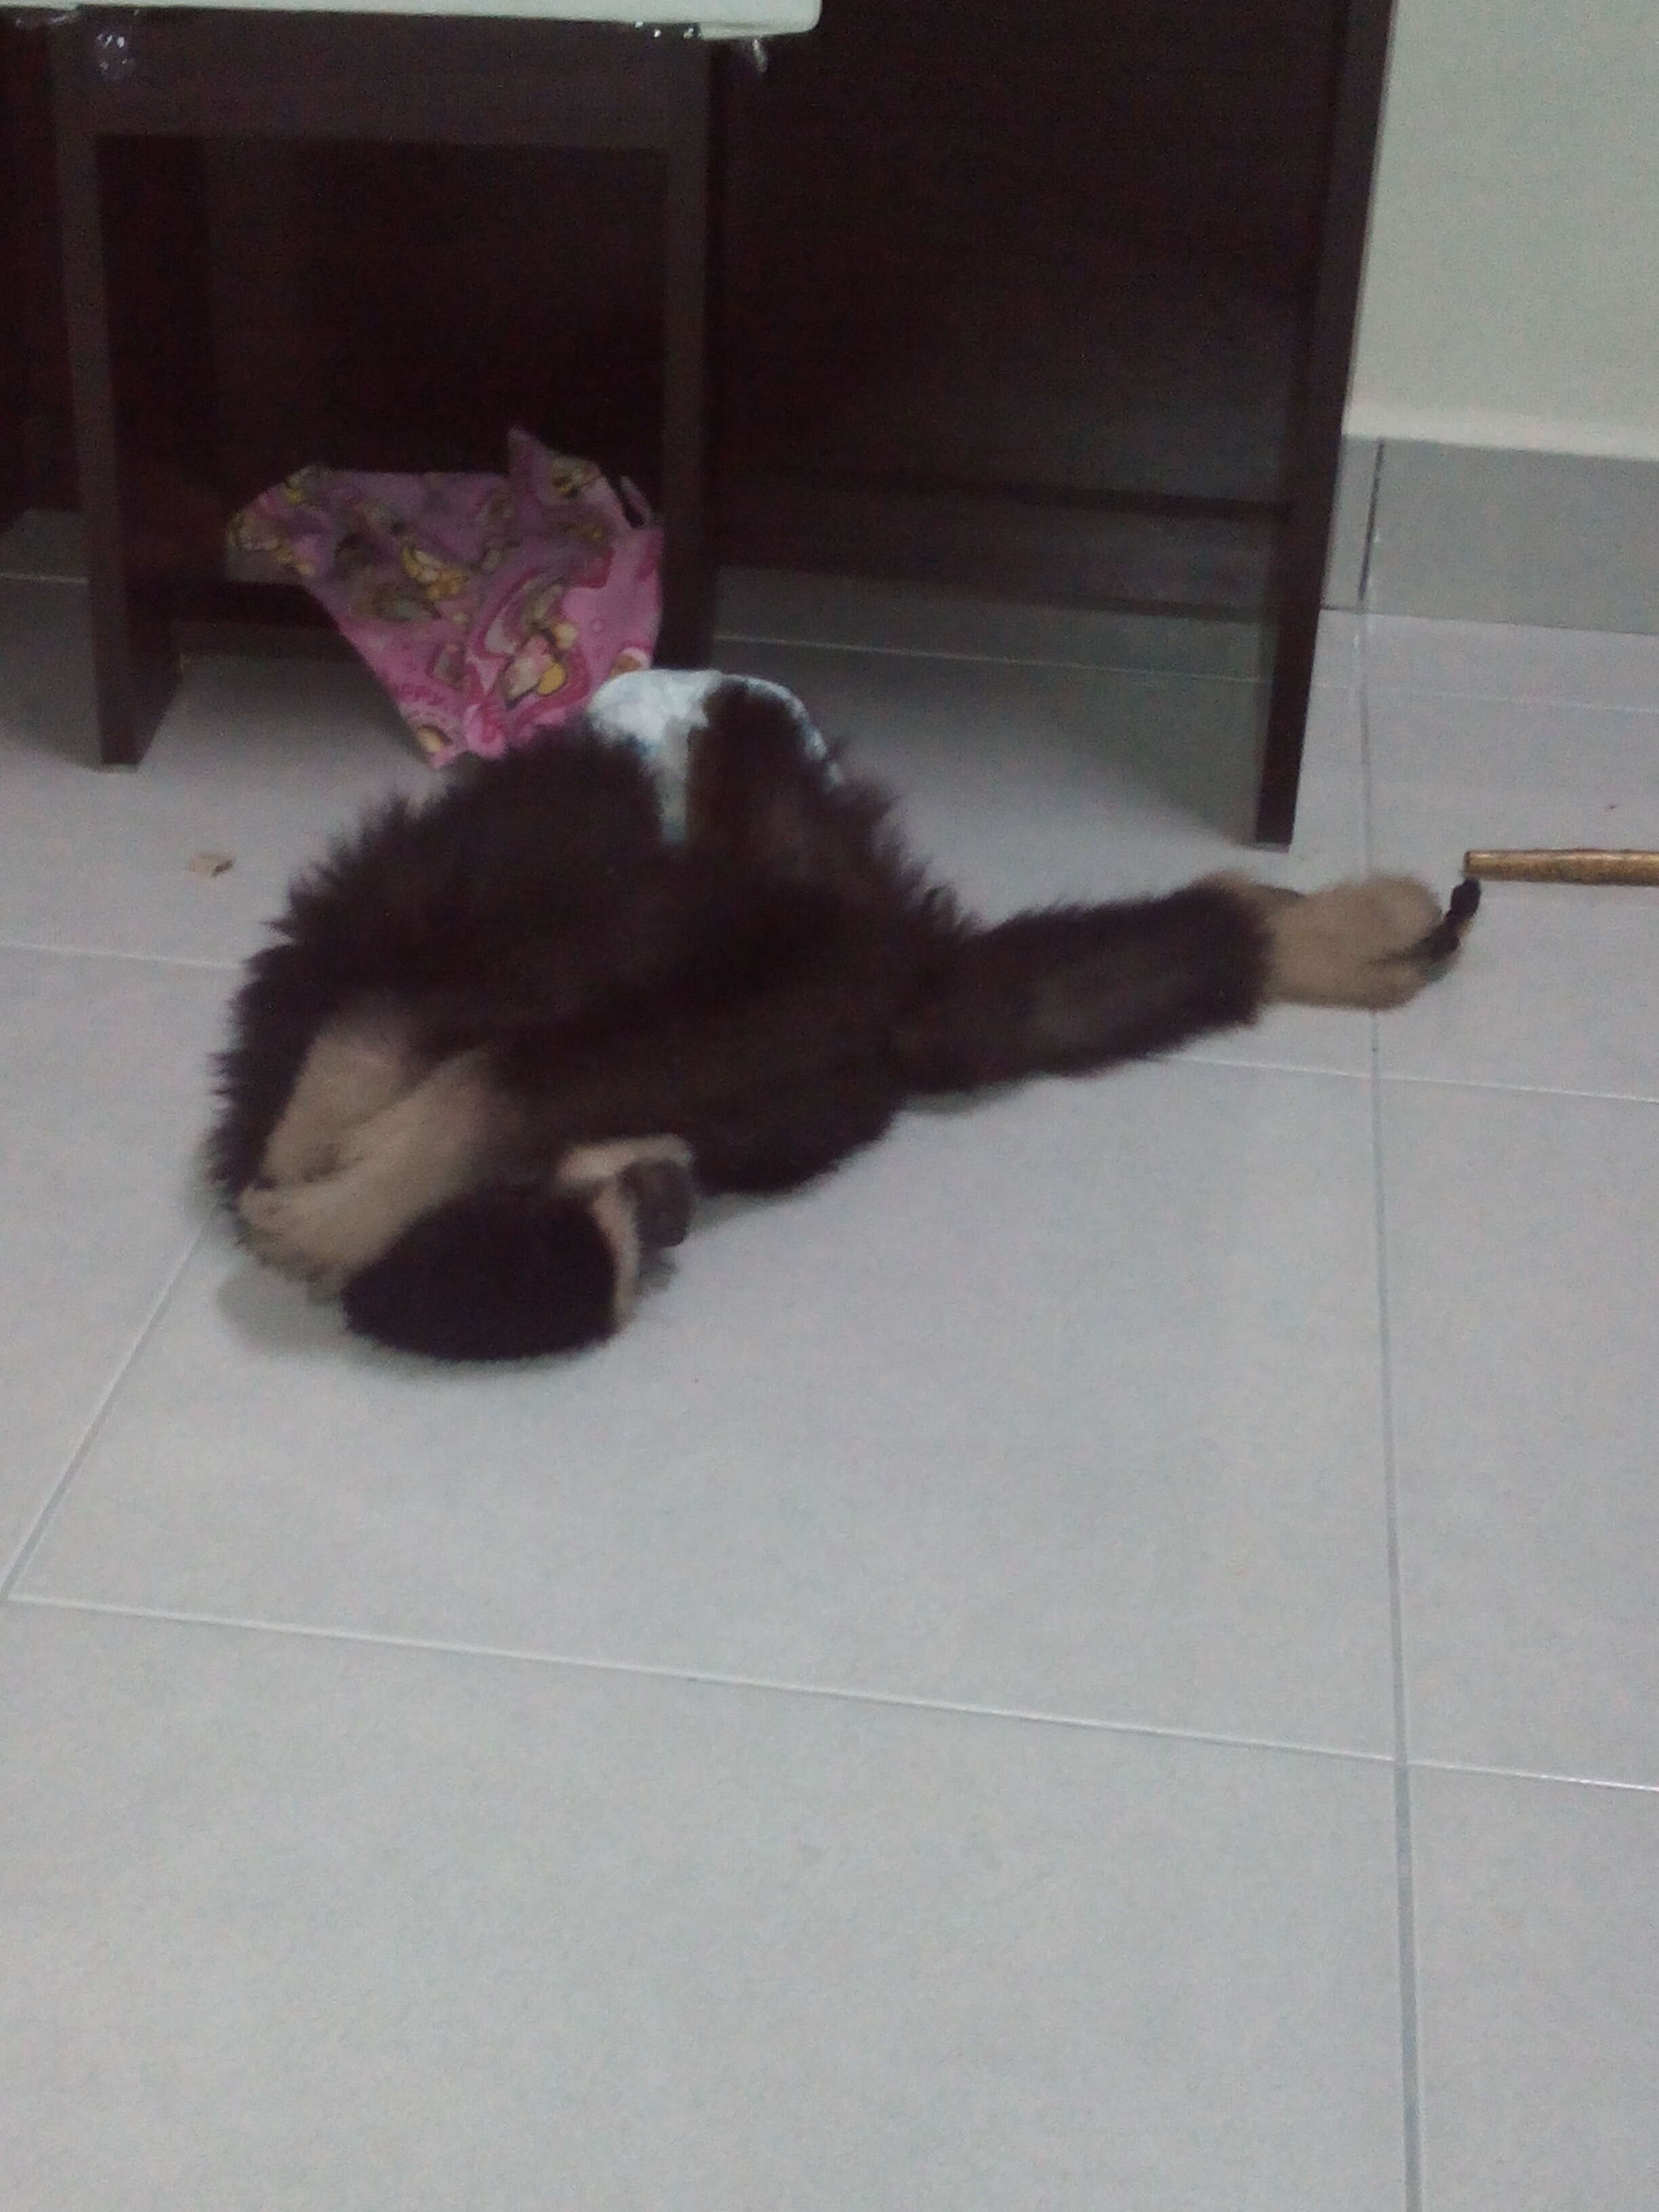 Wild gibbon hiding on the floor